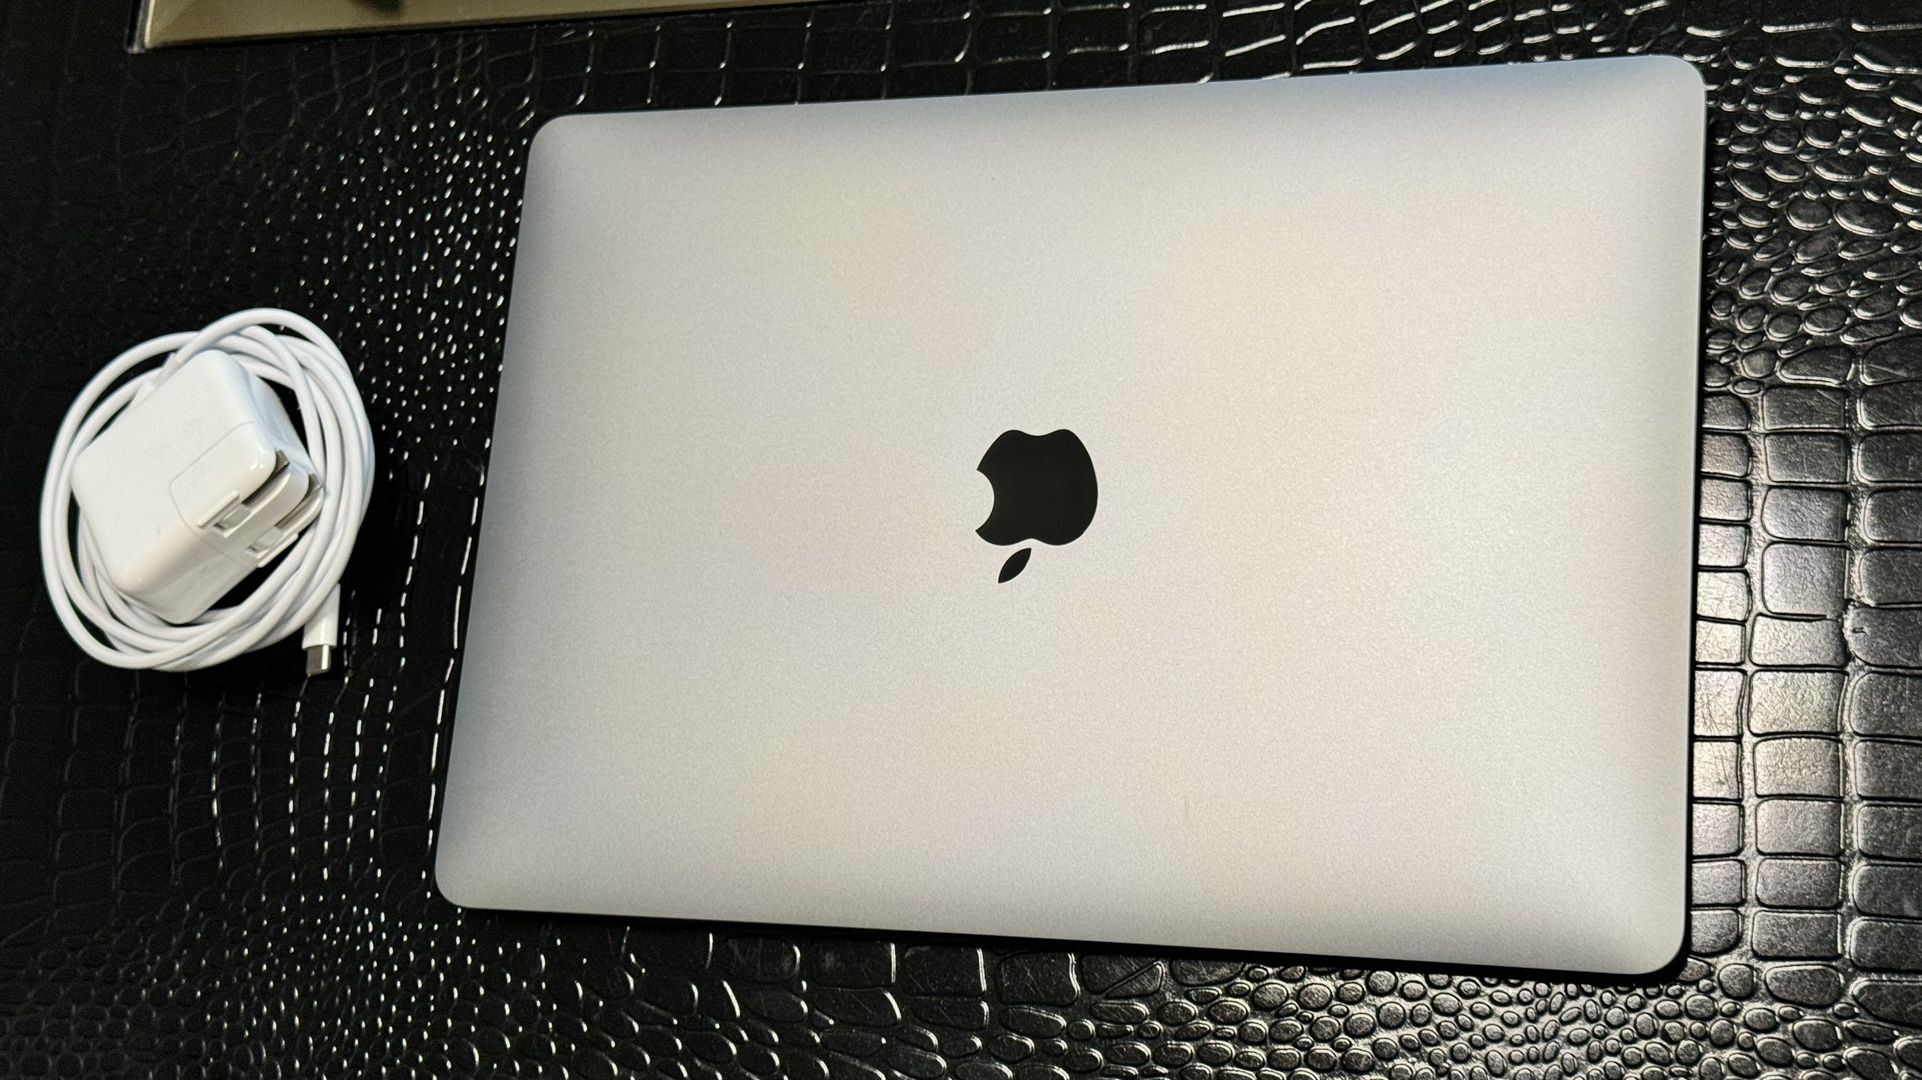 MacBook Air M1 2020 256gb